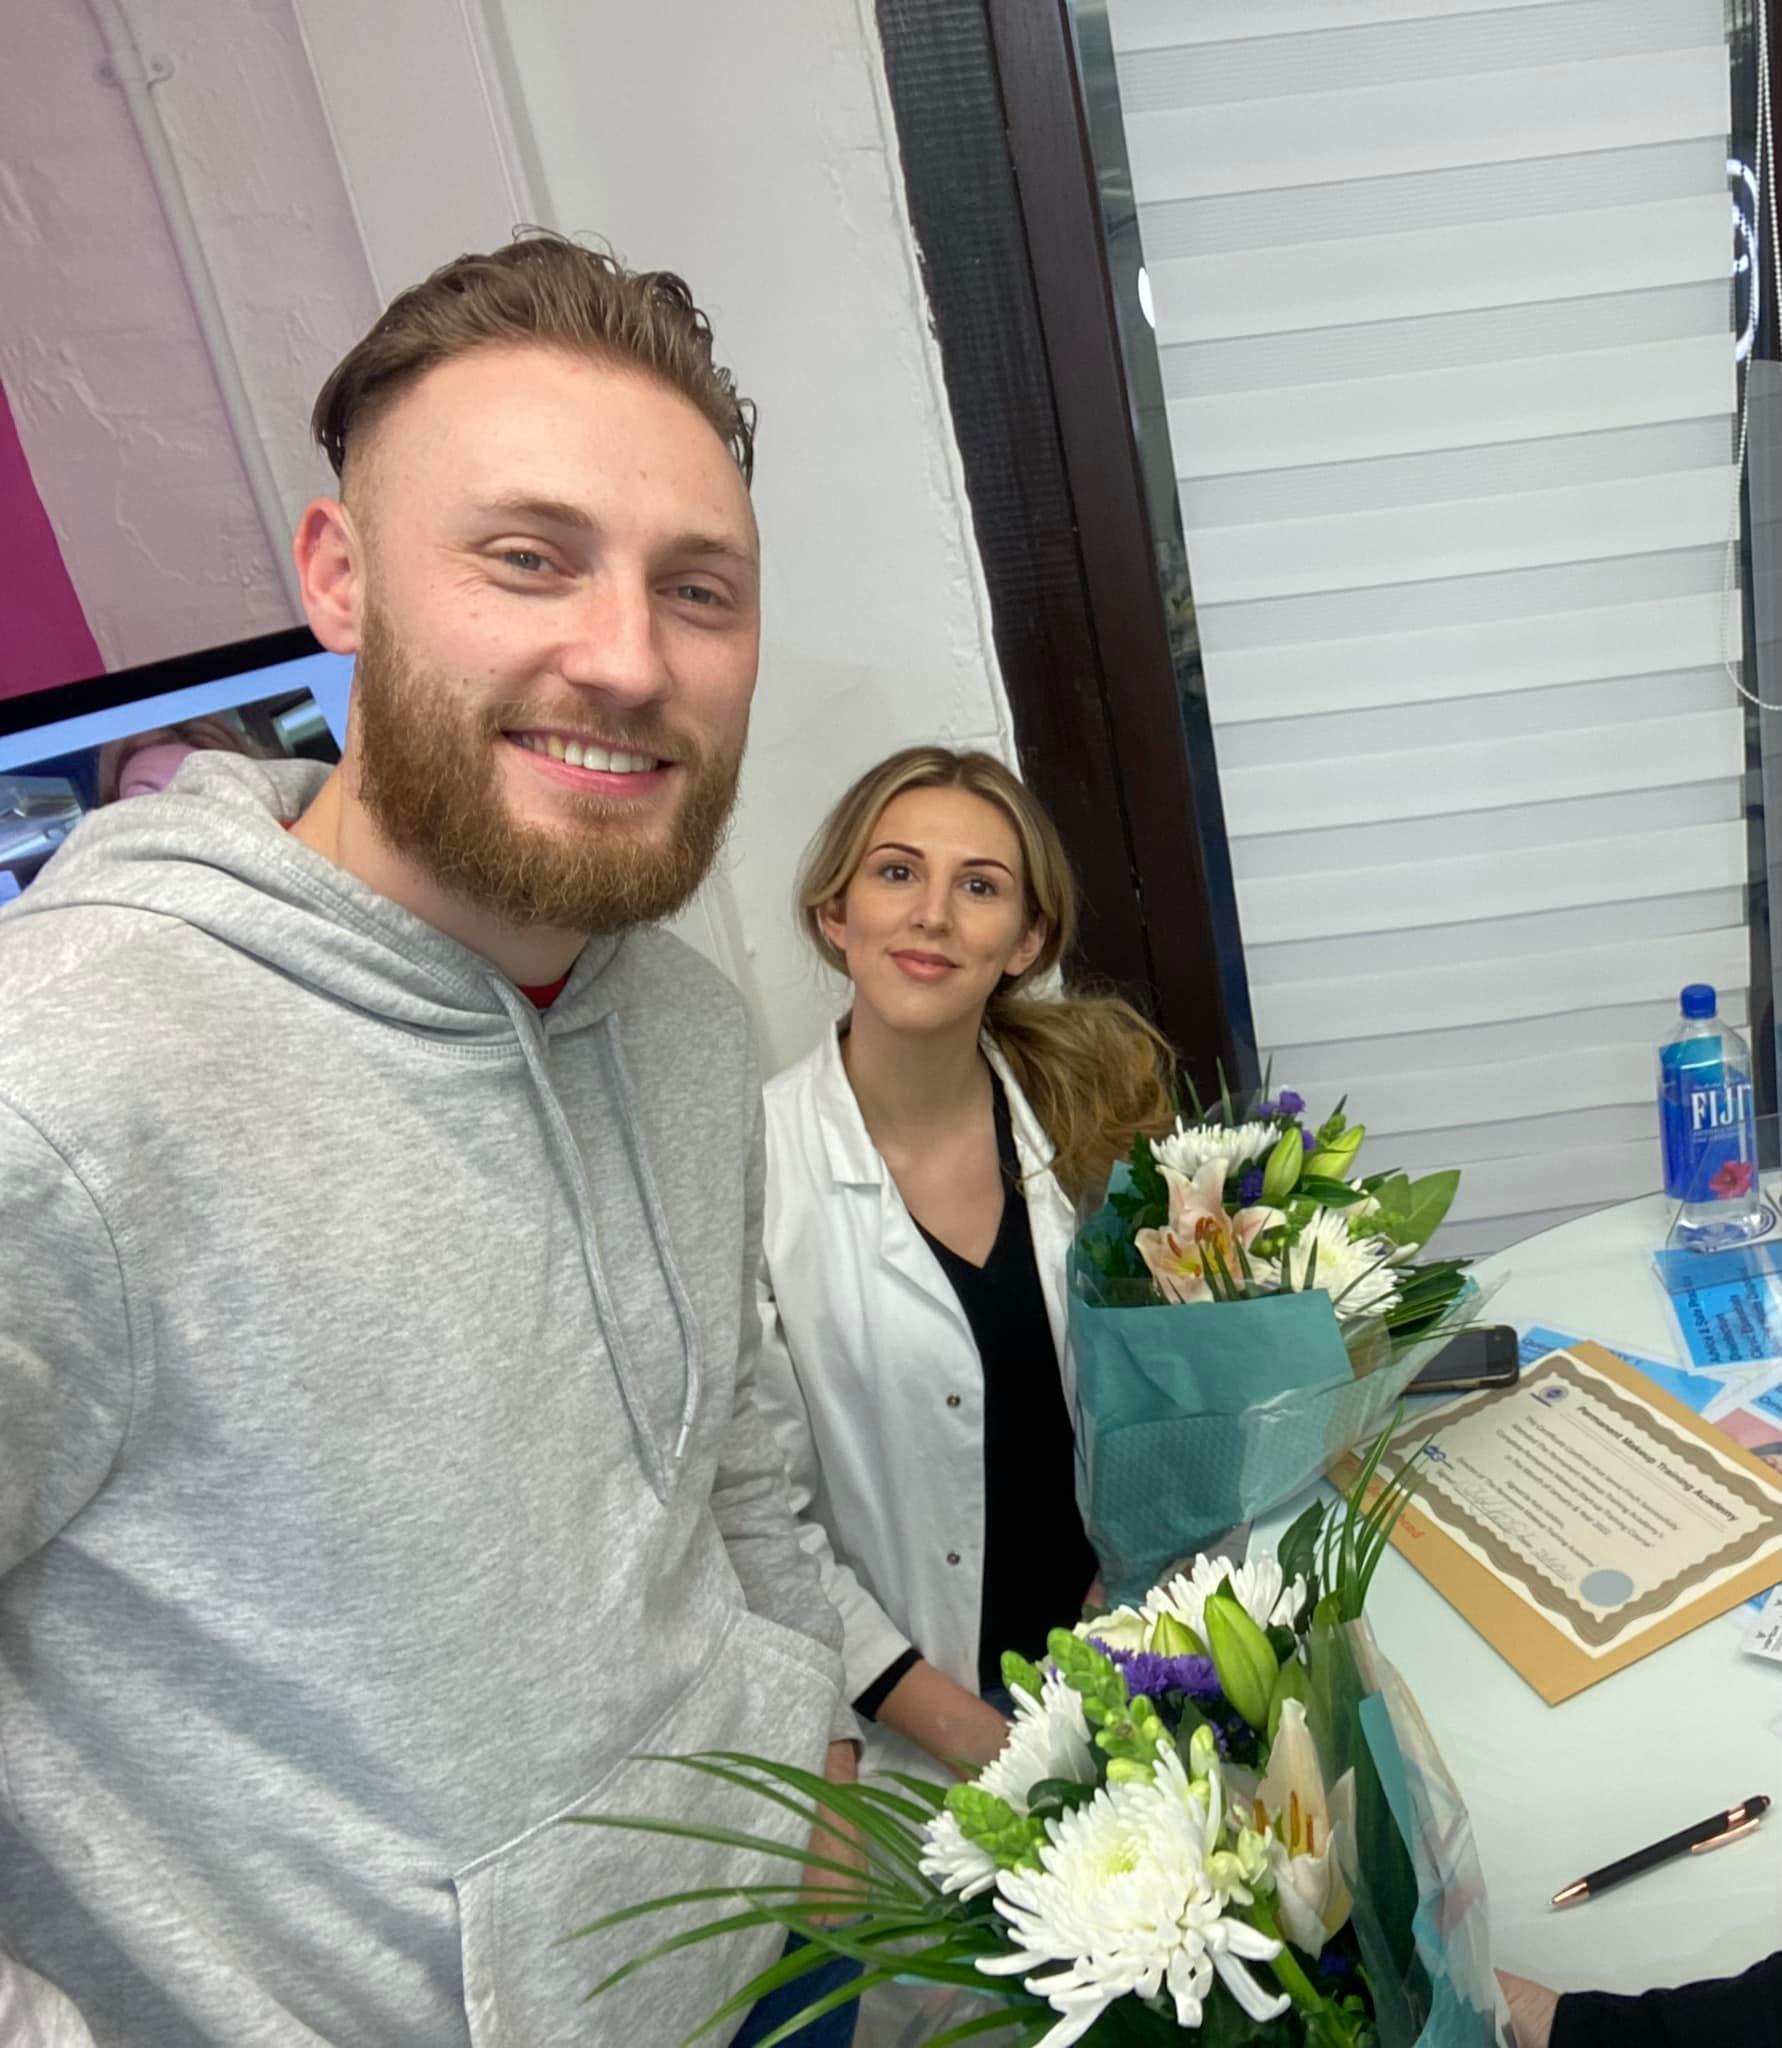 Jenna's husband presents Jenna and Katy with Flowers